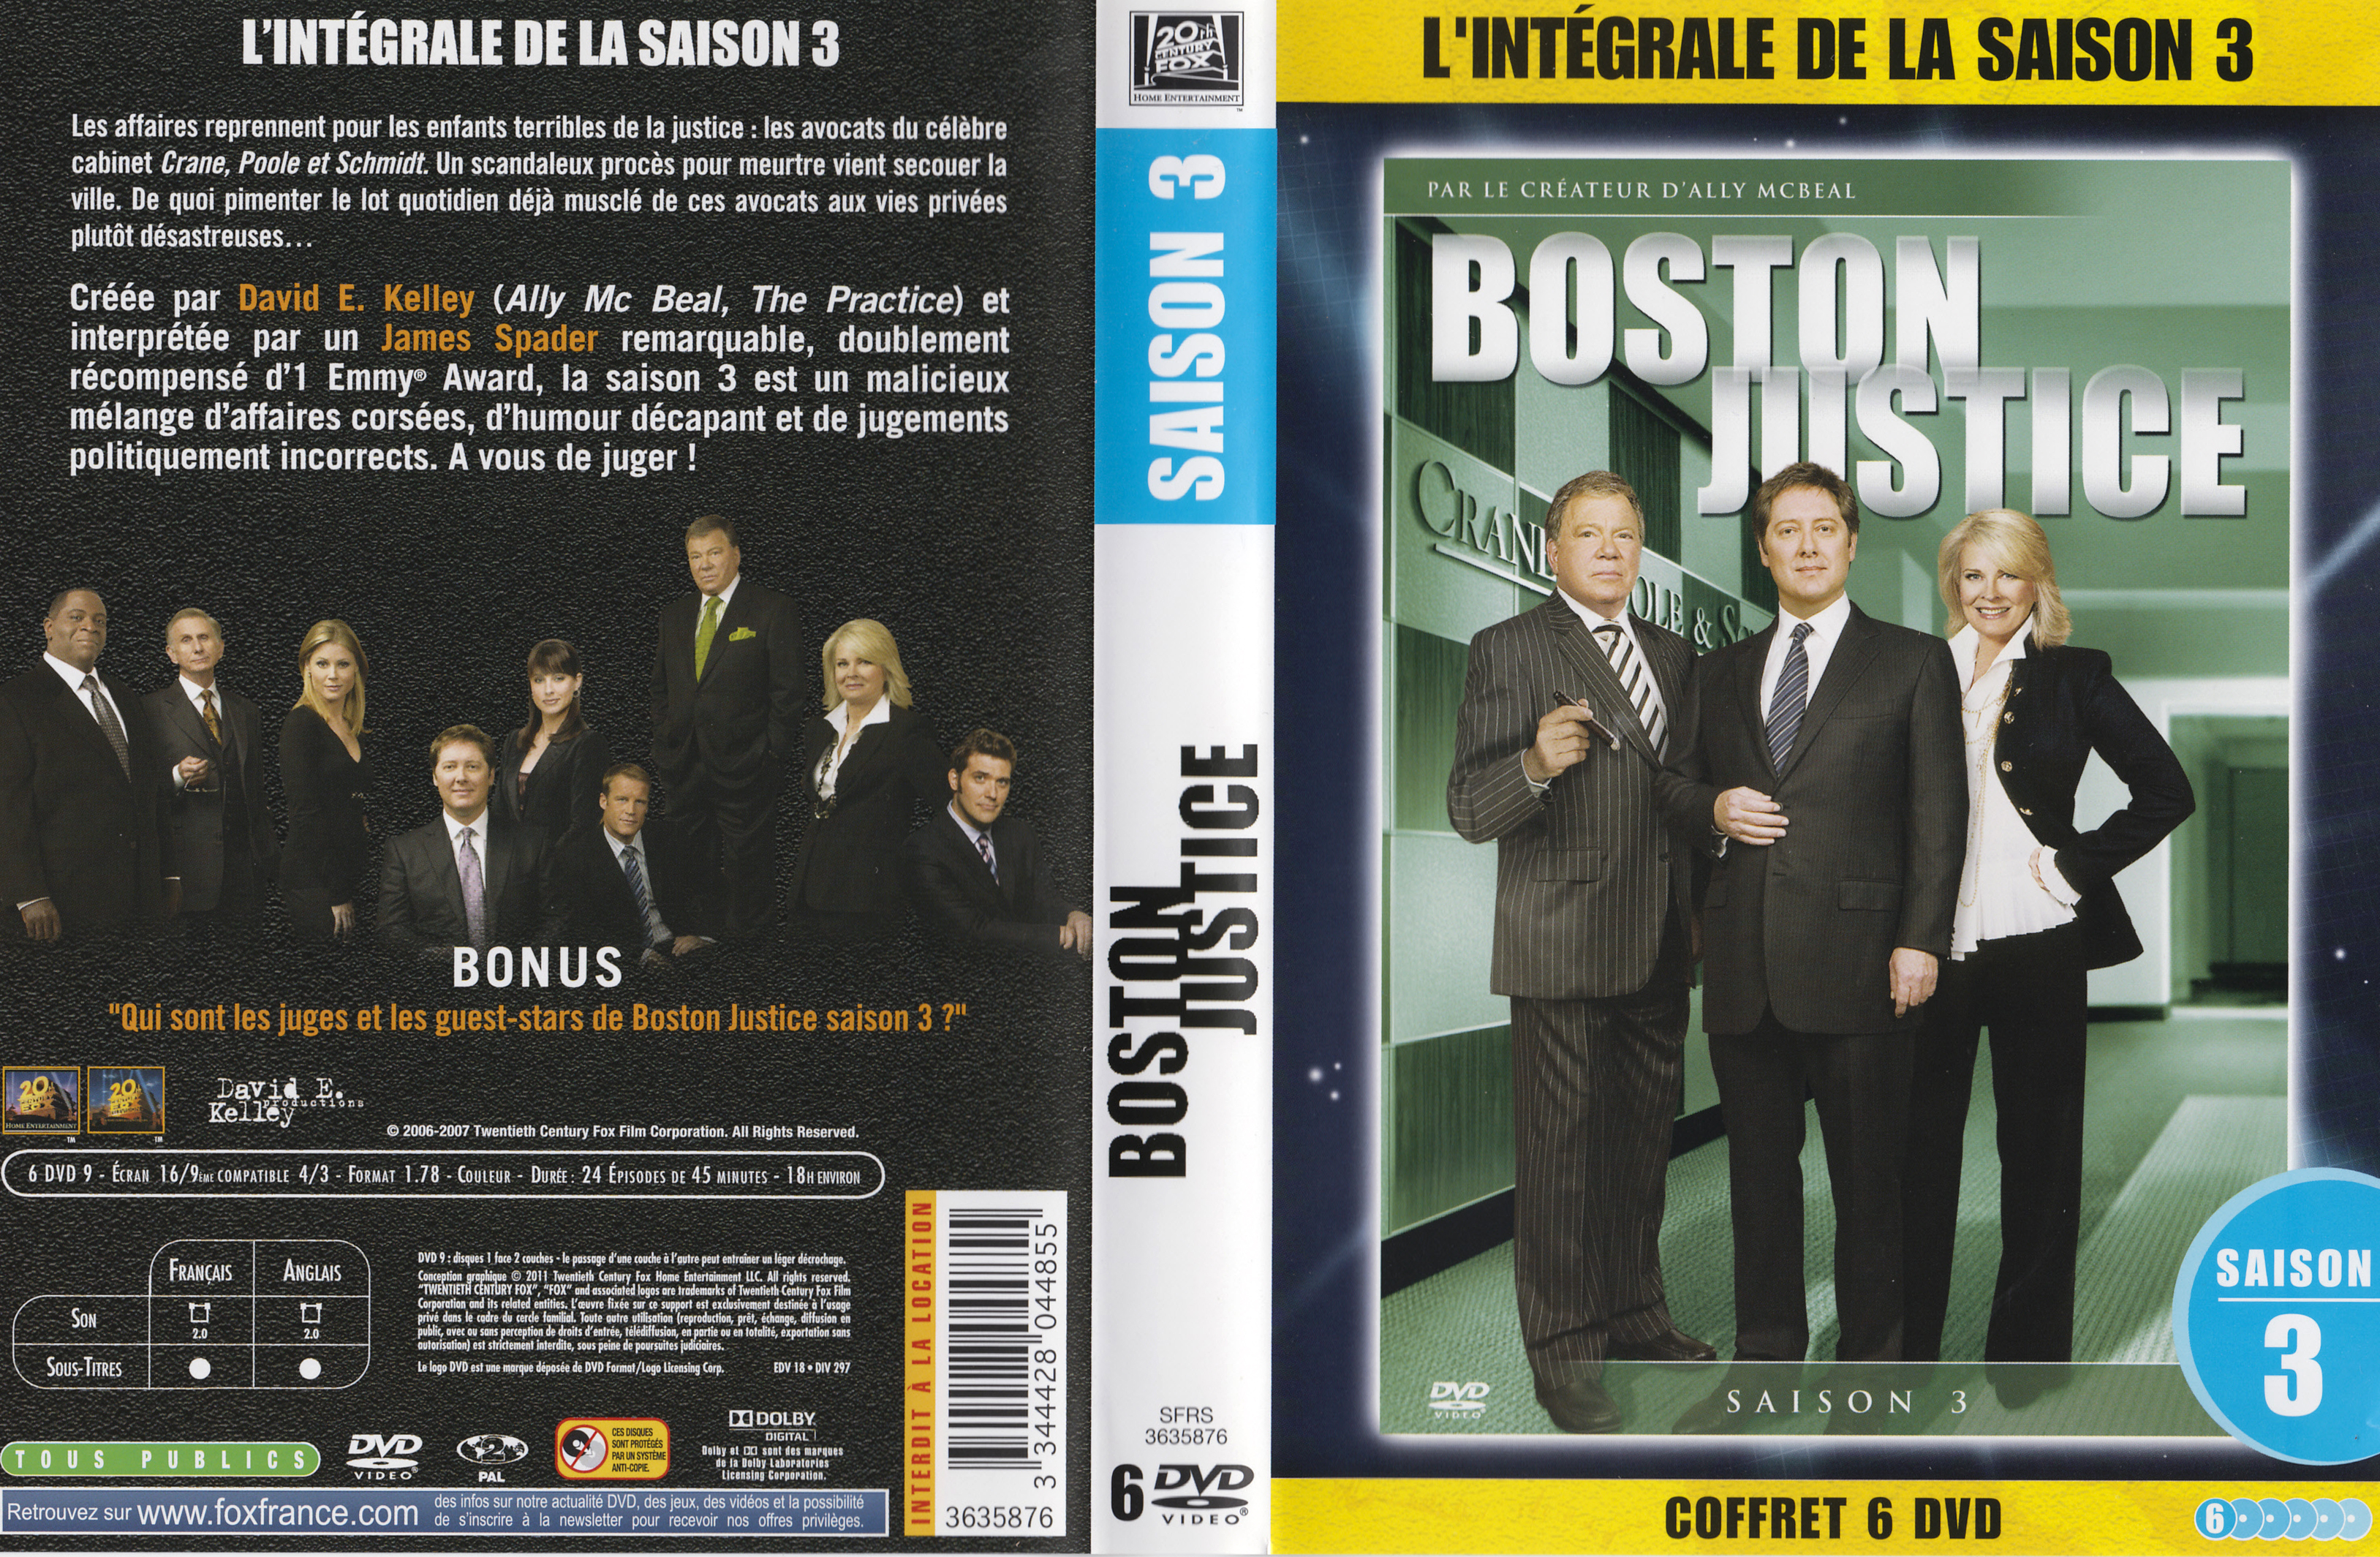 Jaquette DVD Boston justice Saison 3 COFFRET v2